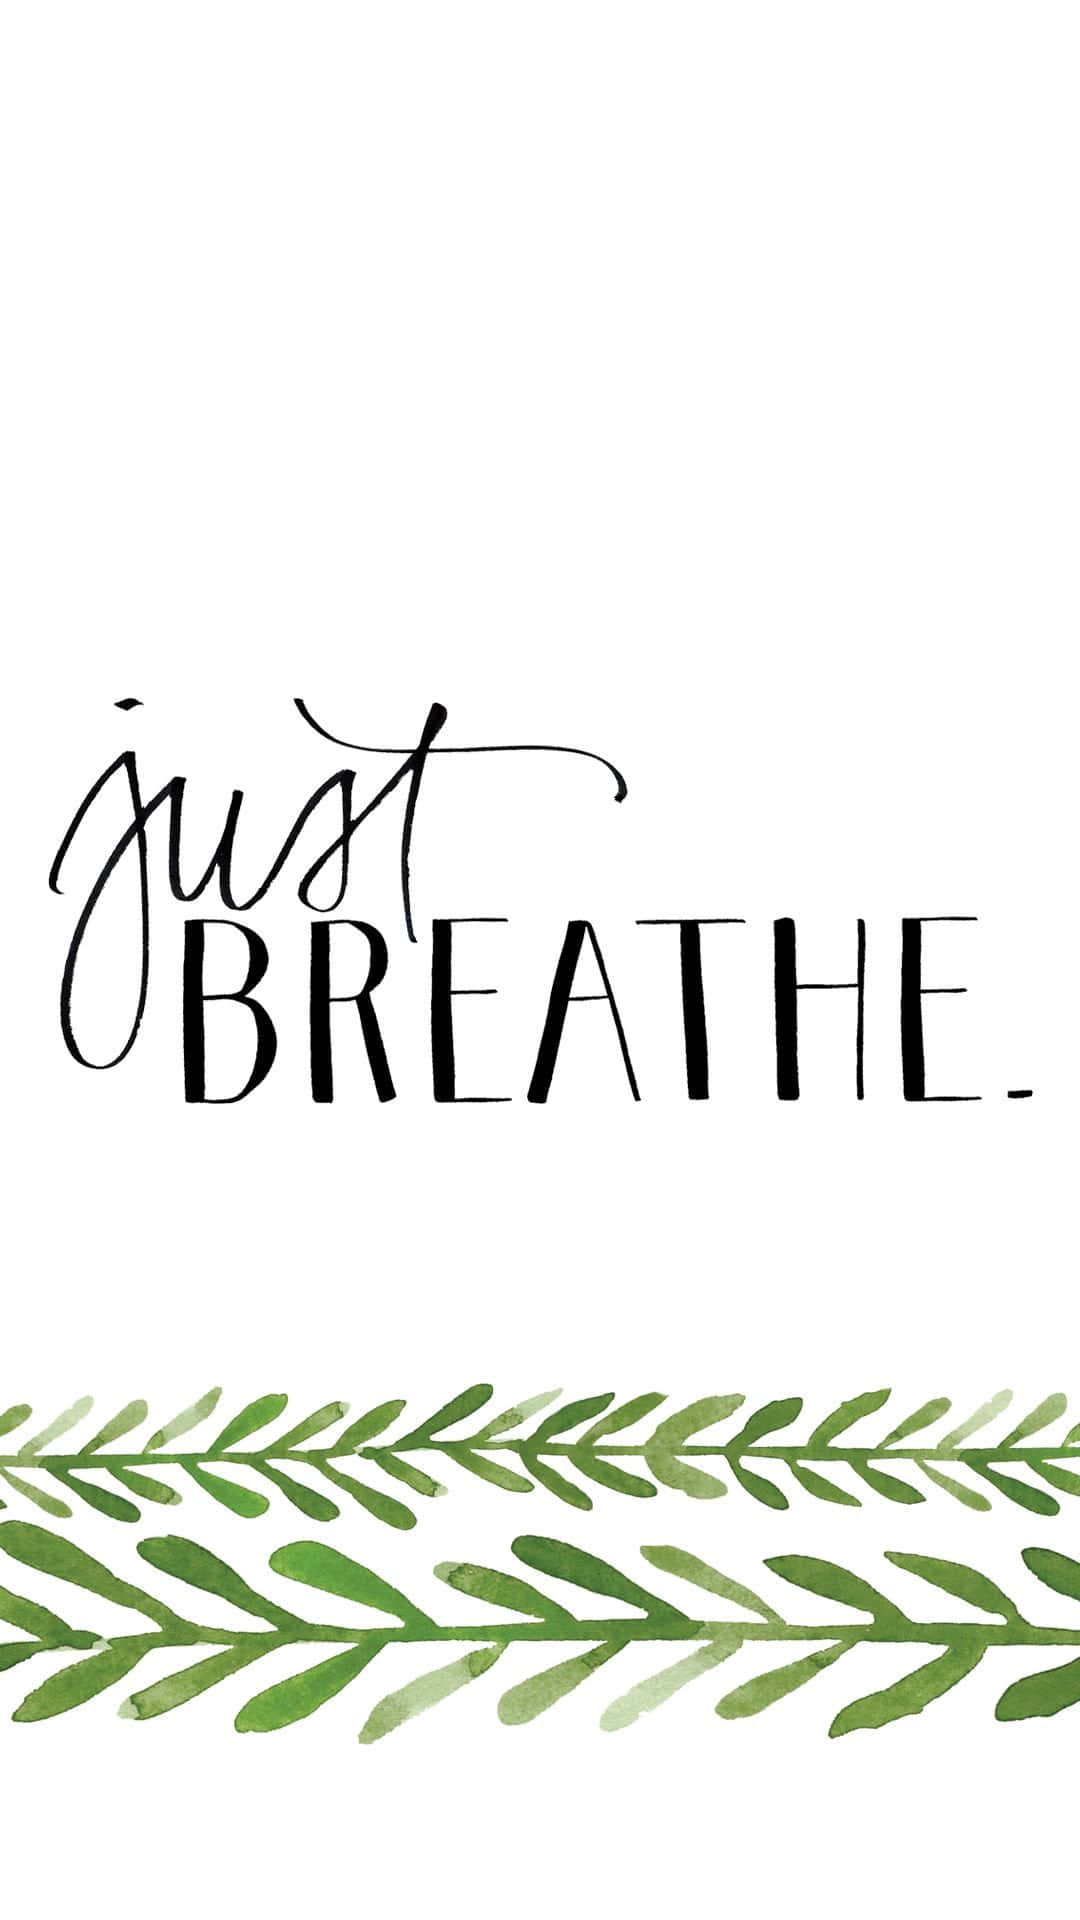 Just Breathe - Watercolor Print